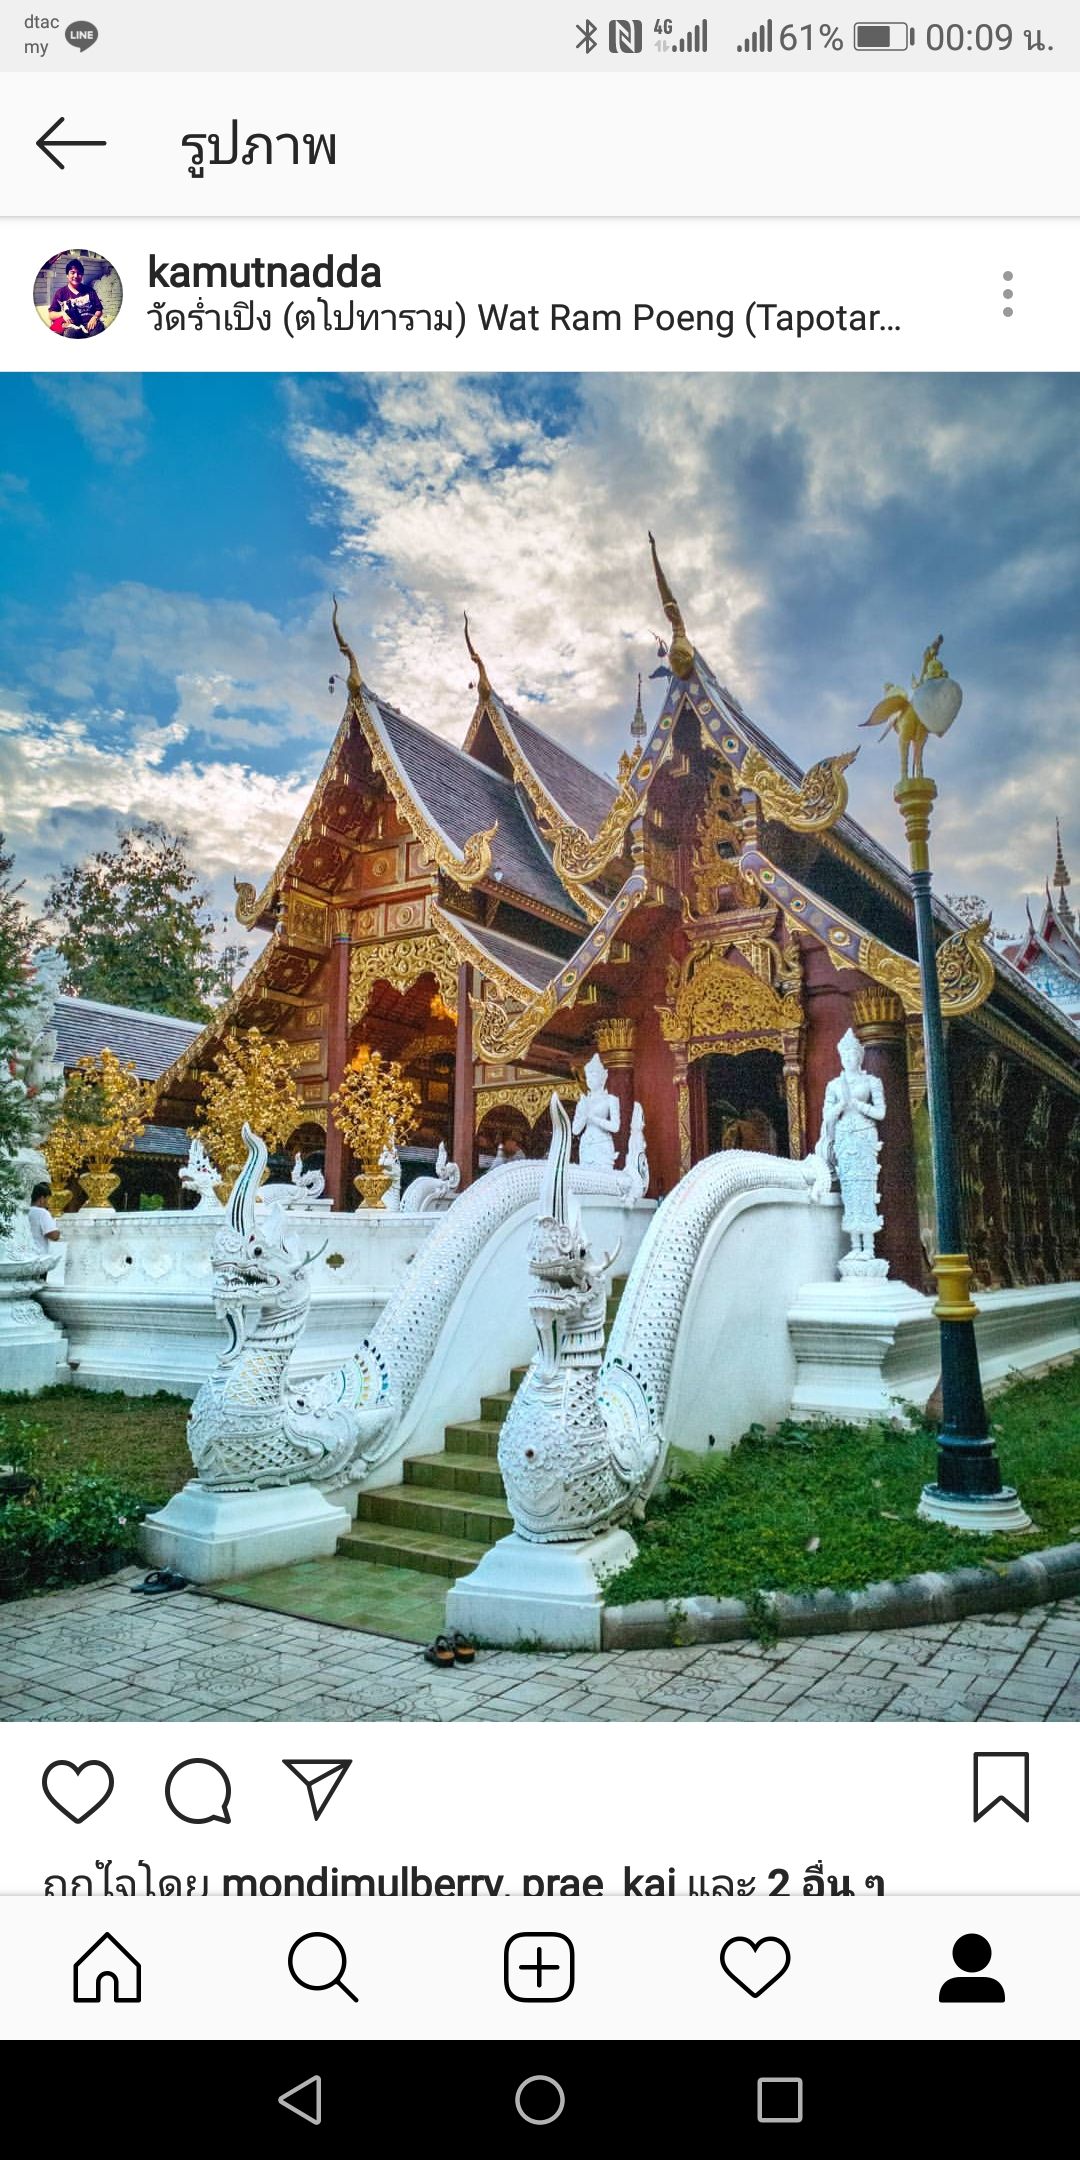 Lamphun, Thailand